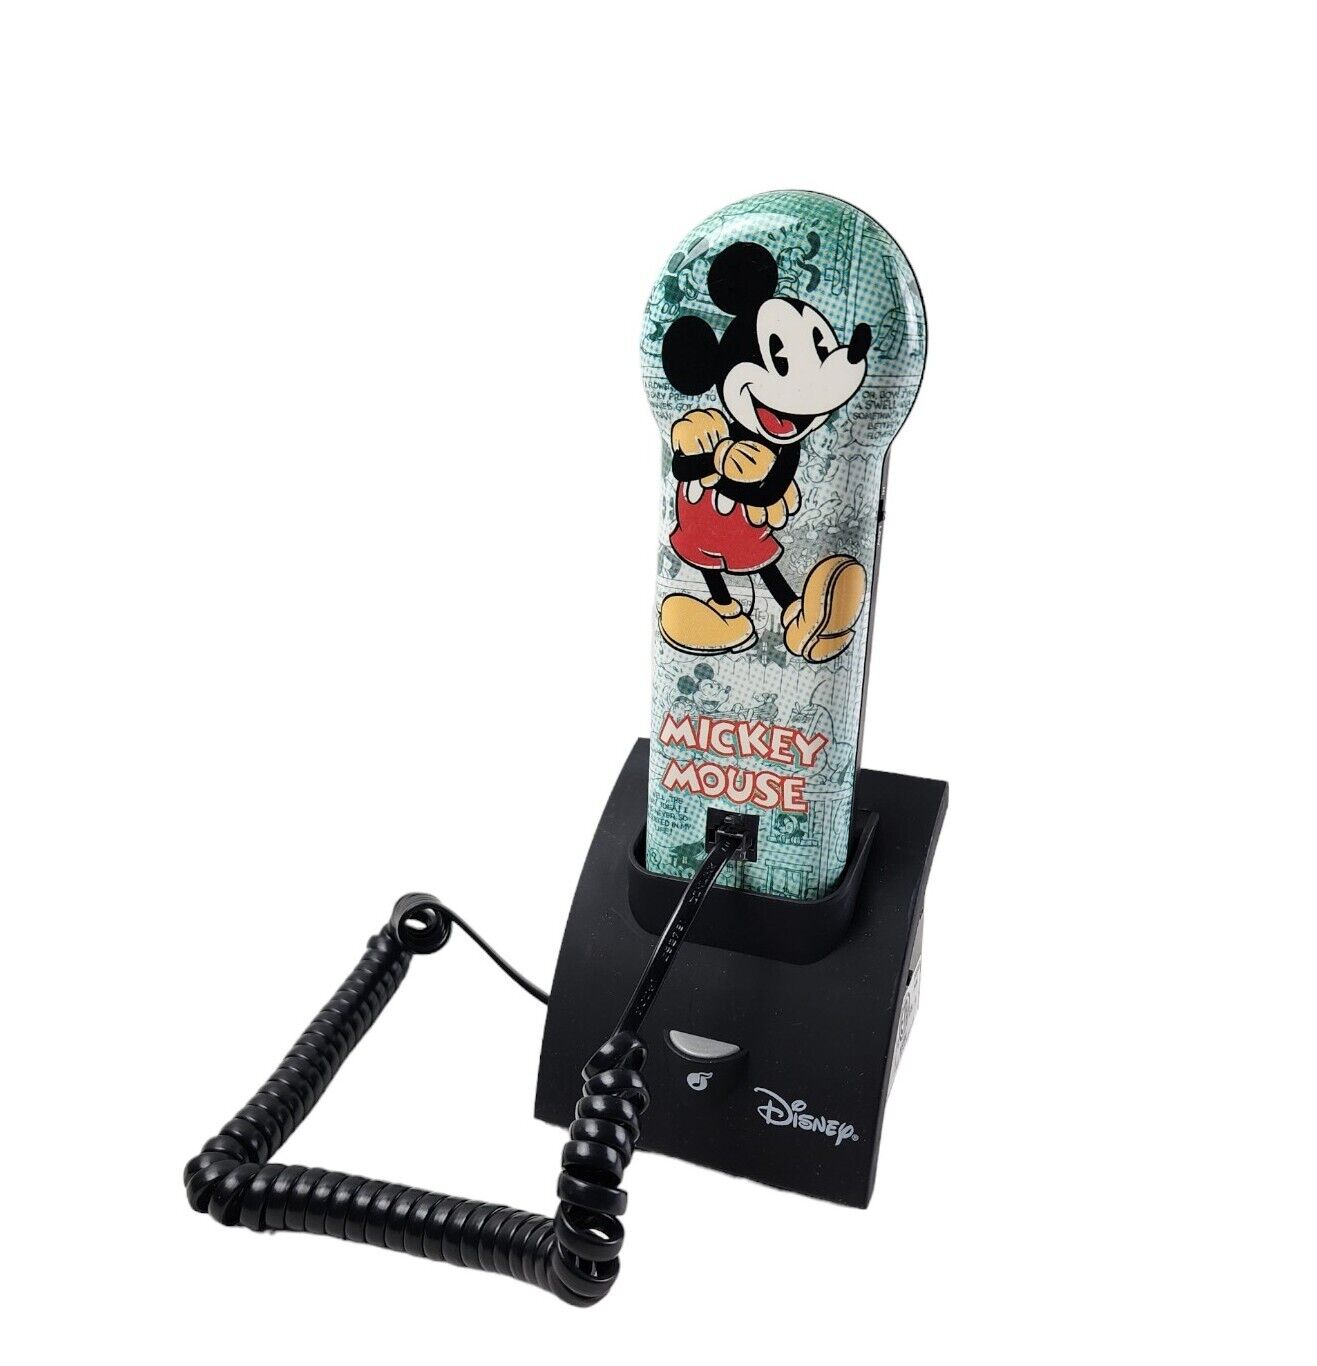 Mickey Mouse Phone Push Button Landline Telephone Disney w/ Box NEW 2004